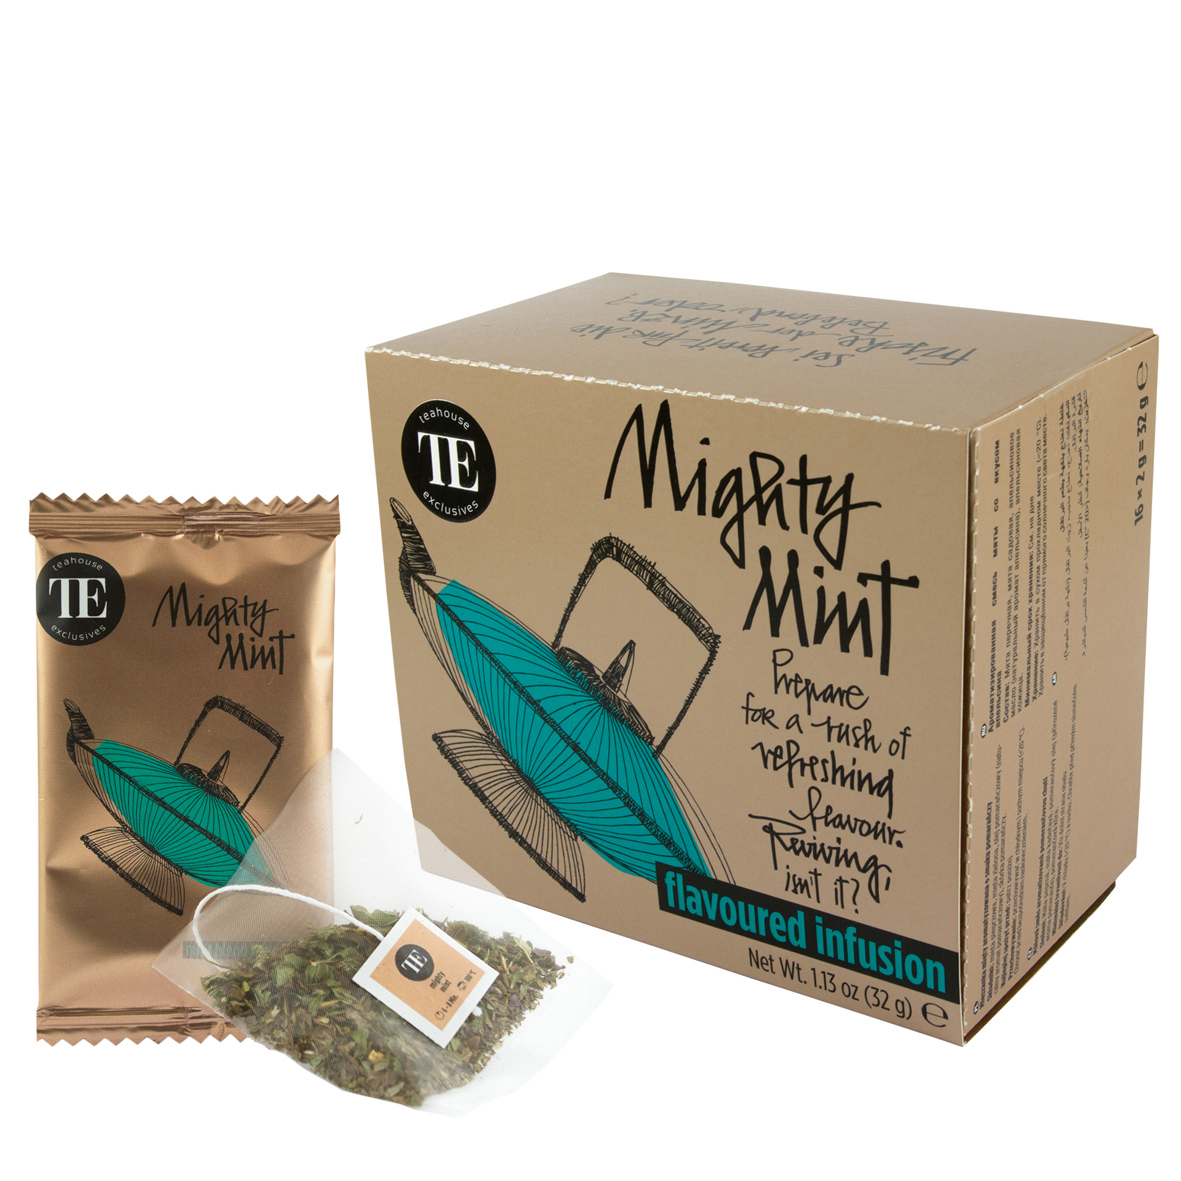 Everyday Tea Mighty Mint